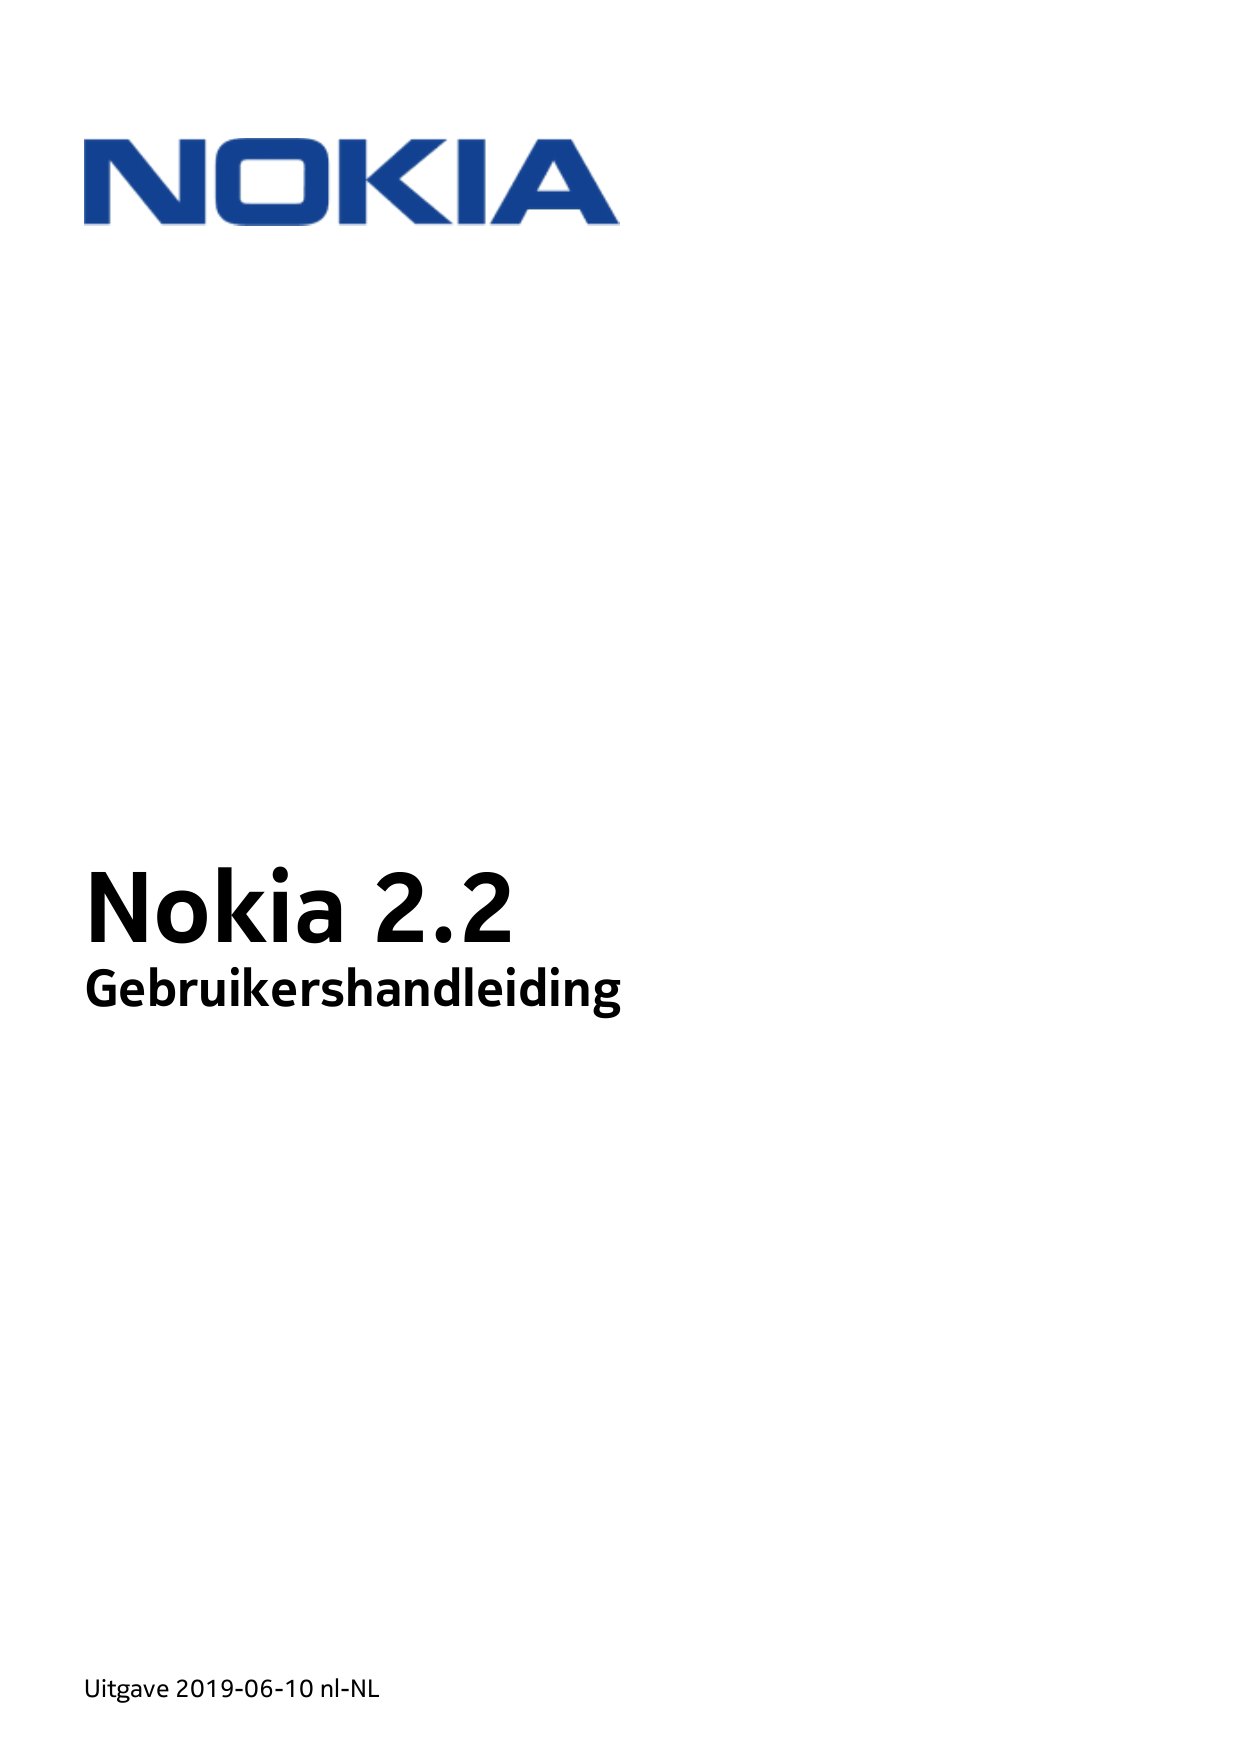 Nokia 2.2GebruikershandleidingUitgave 2019-06-10 nl-NL